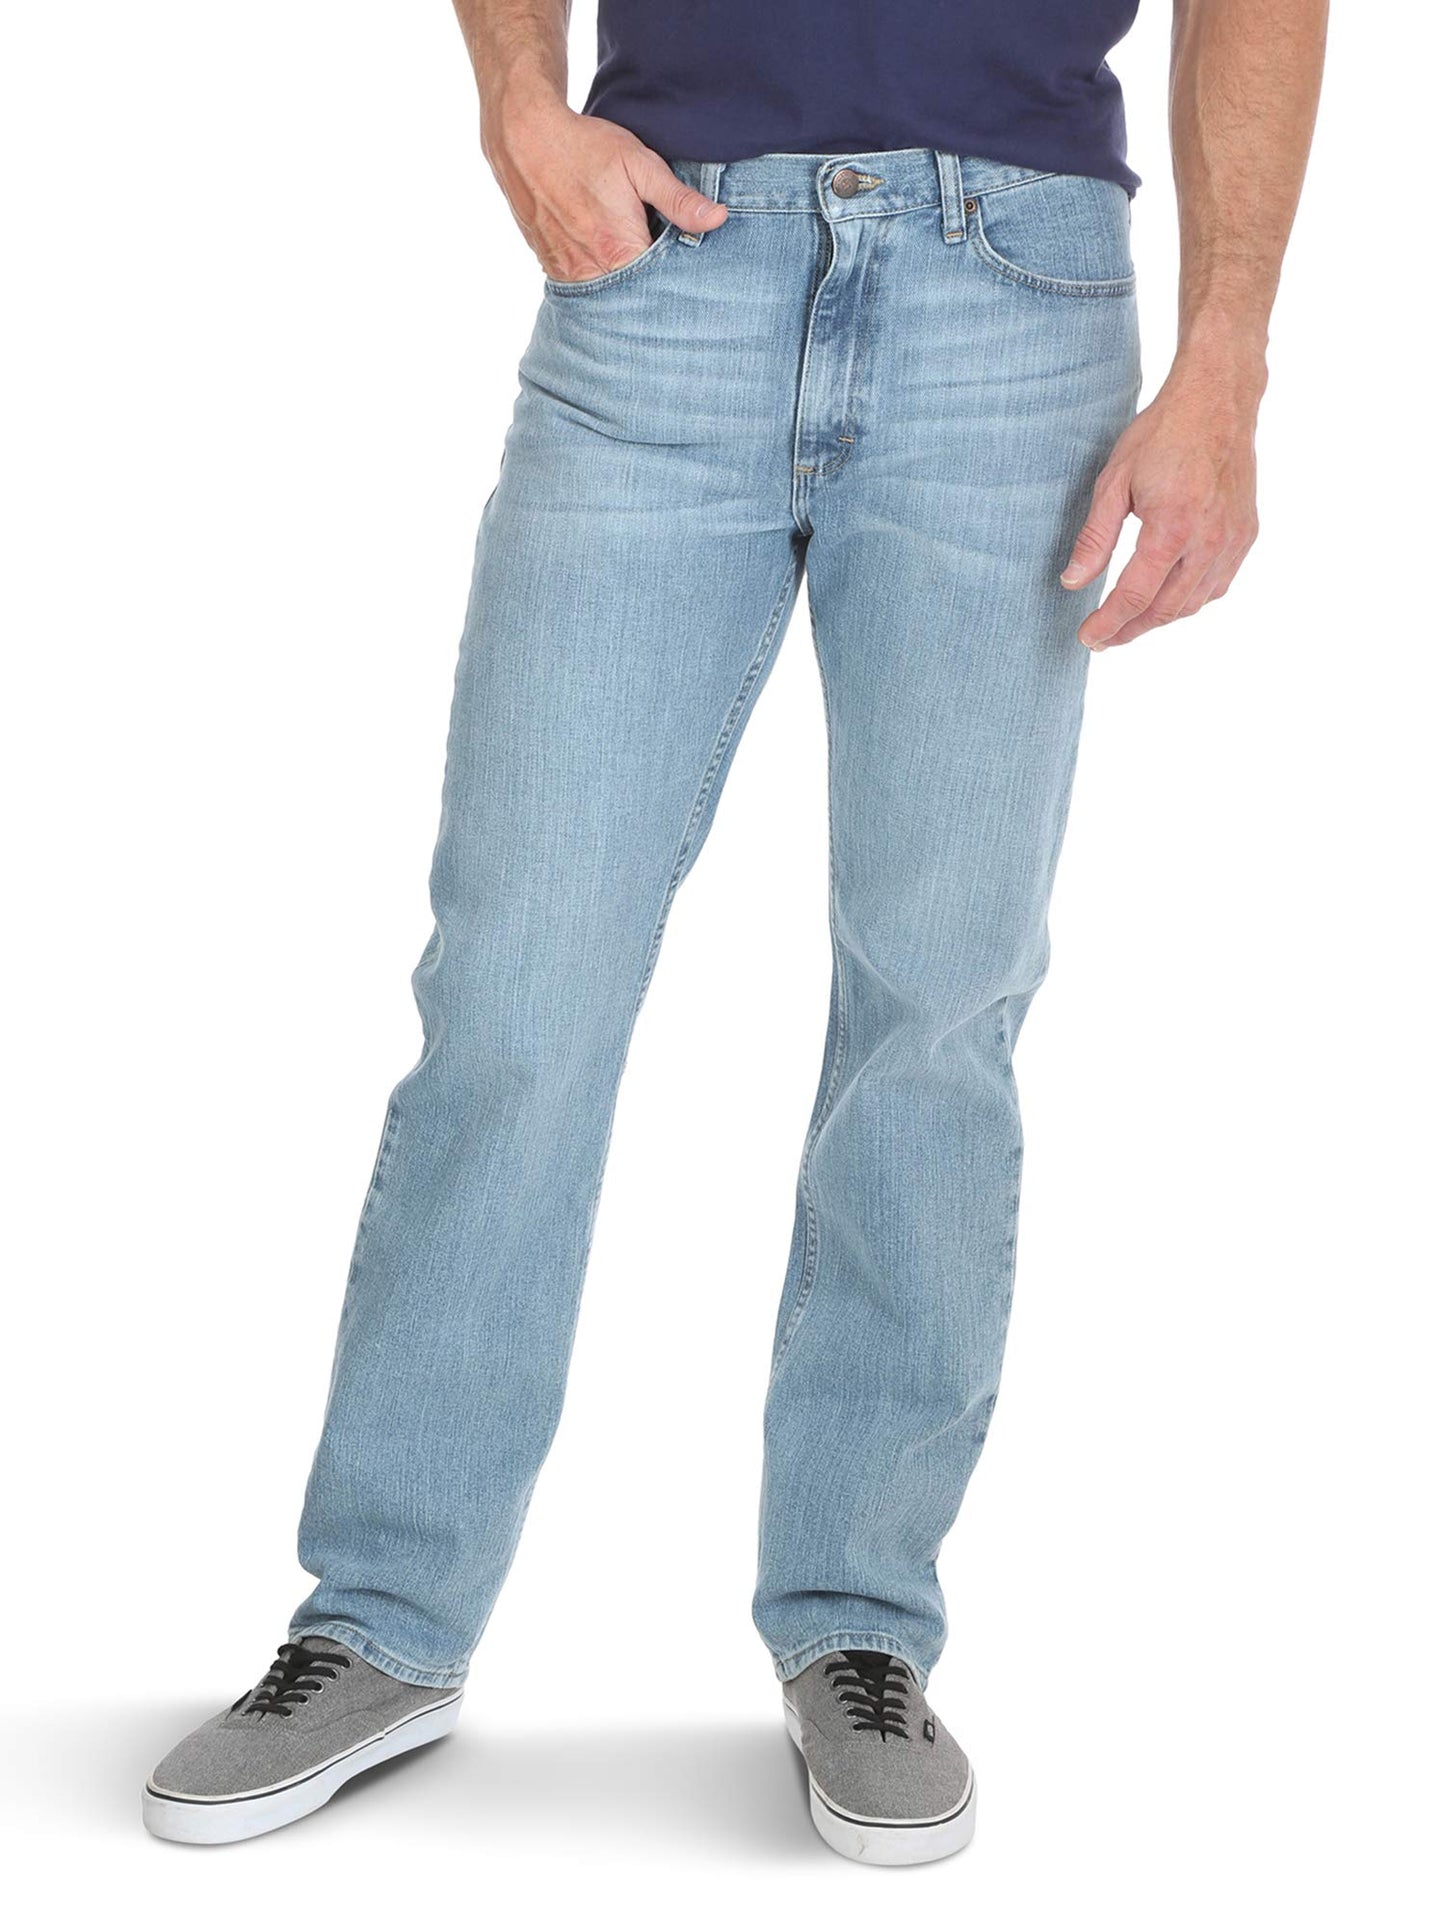 Wrangler Authentics Men's Classic 5-Pocket Regular Fit Jean, Stonewash Flex, 33W x 30L